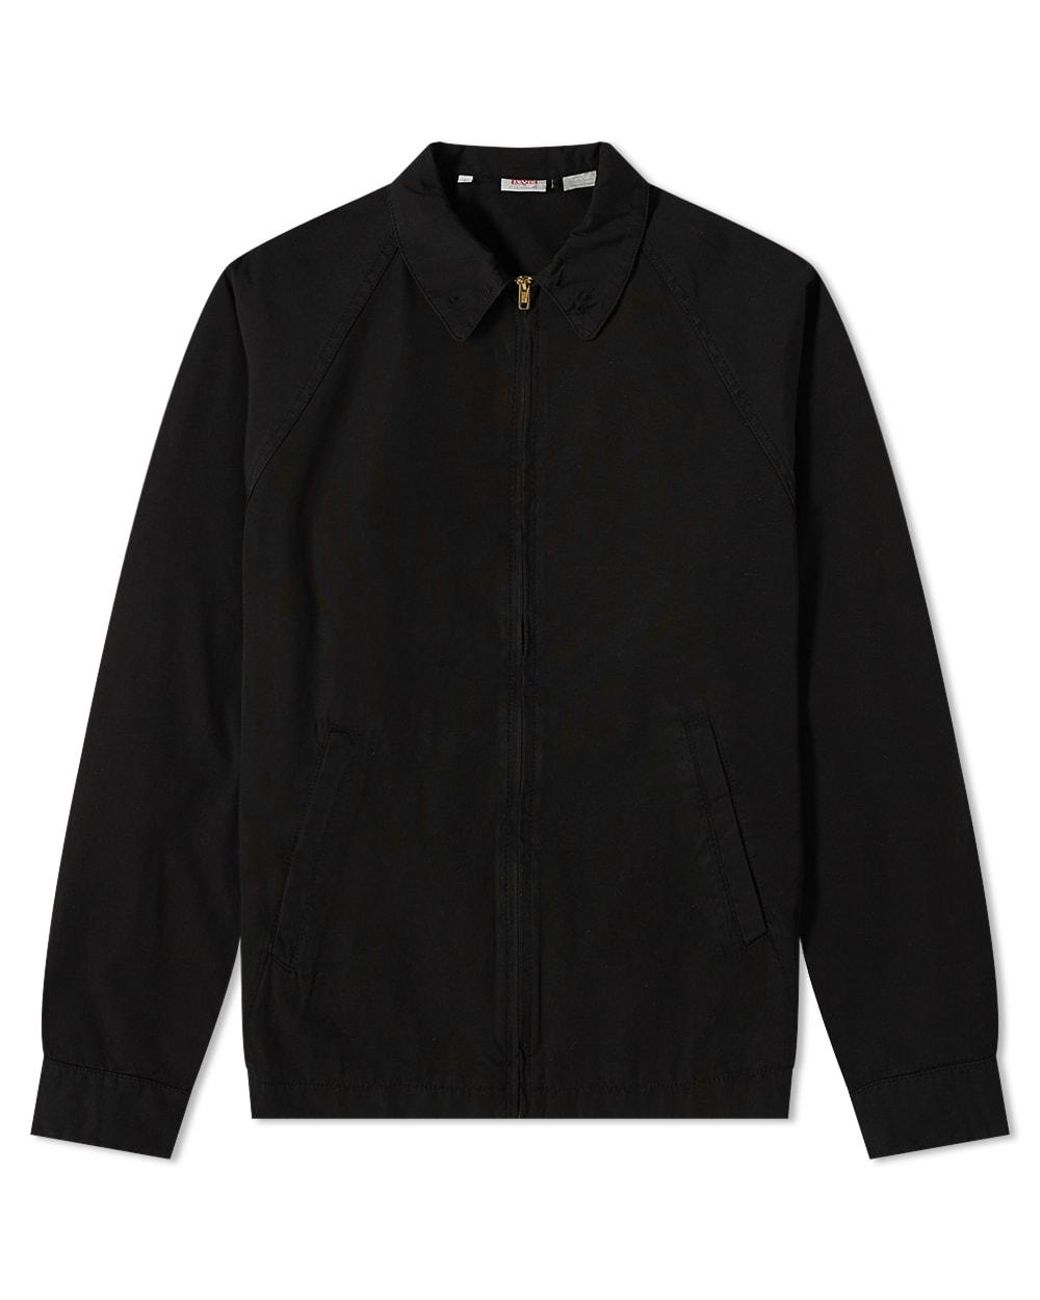 Levi's Cotton Levi's Vintage Clothing Harrington Jacket in Black for ...